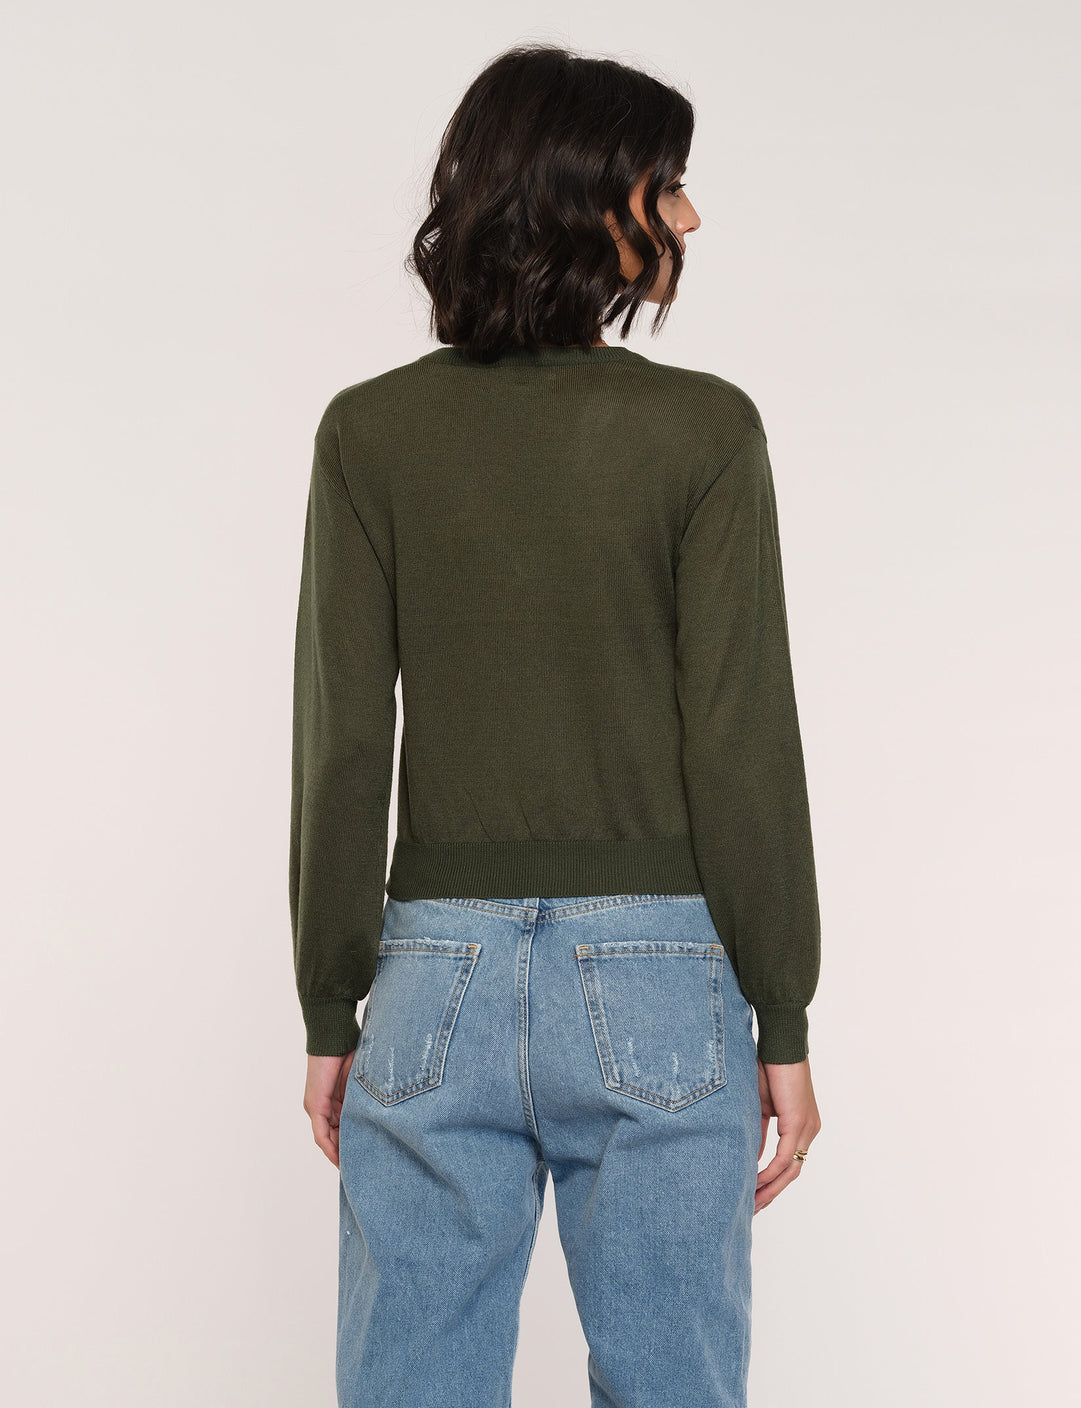 SALE Zephyr Sweater